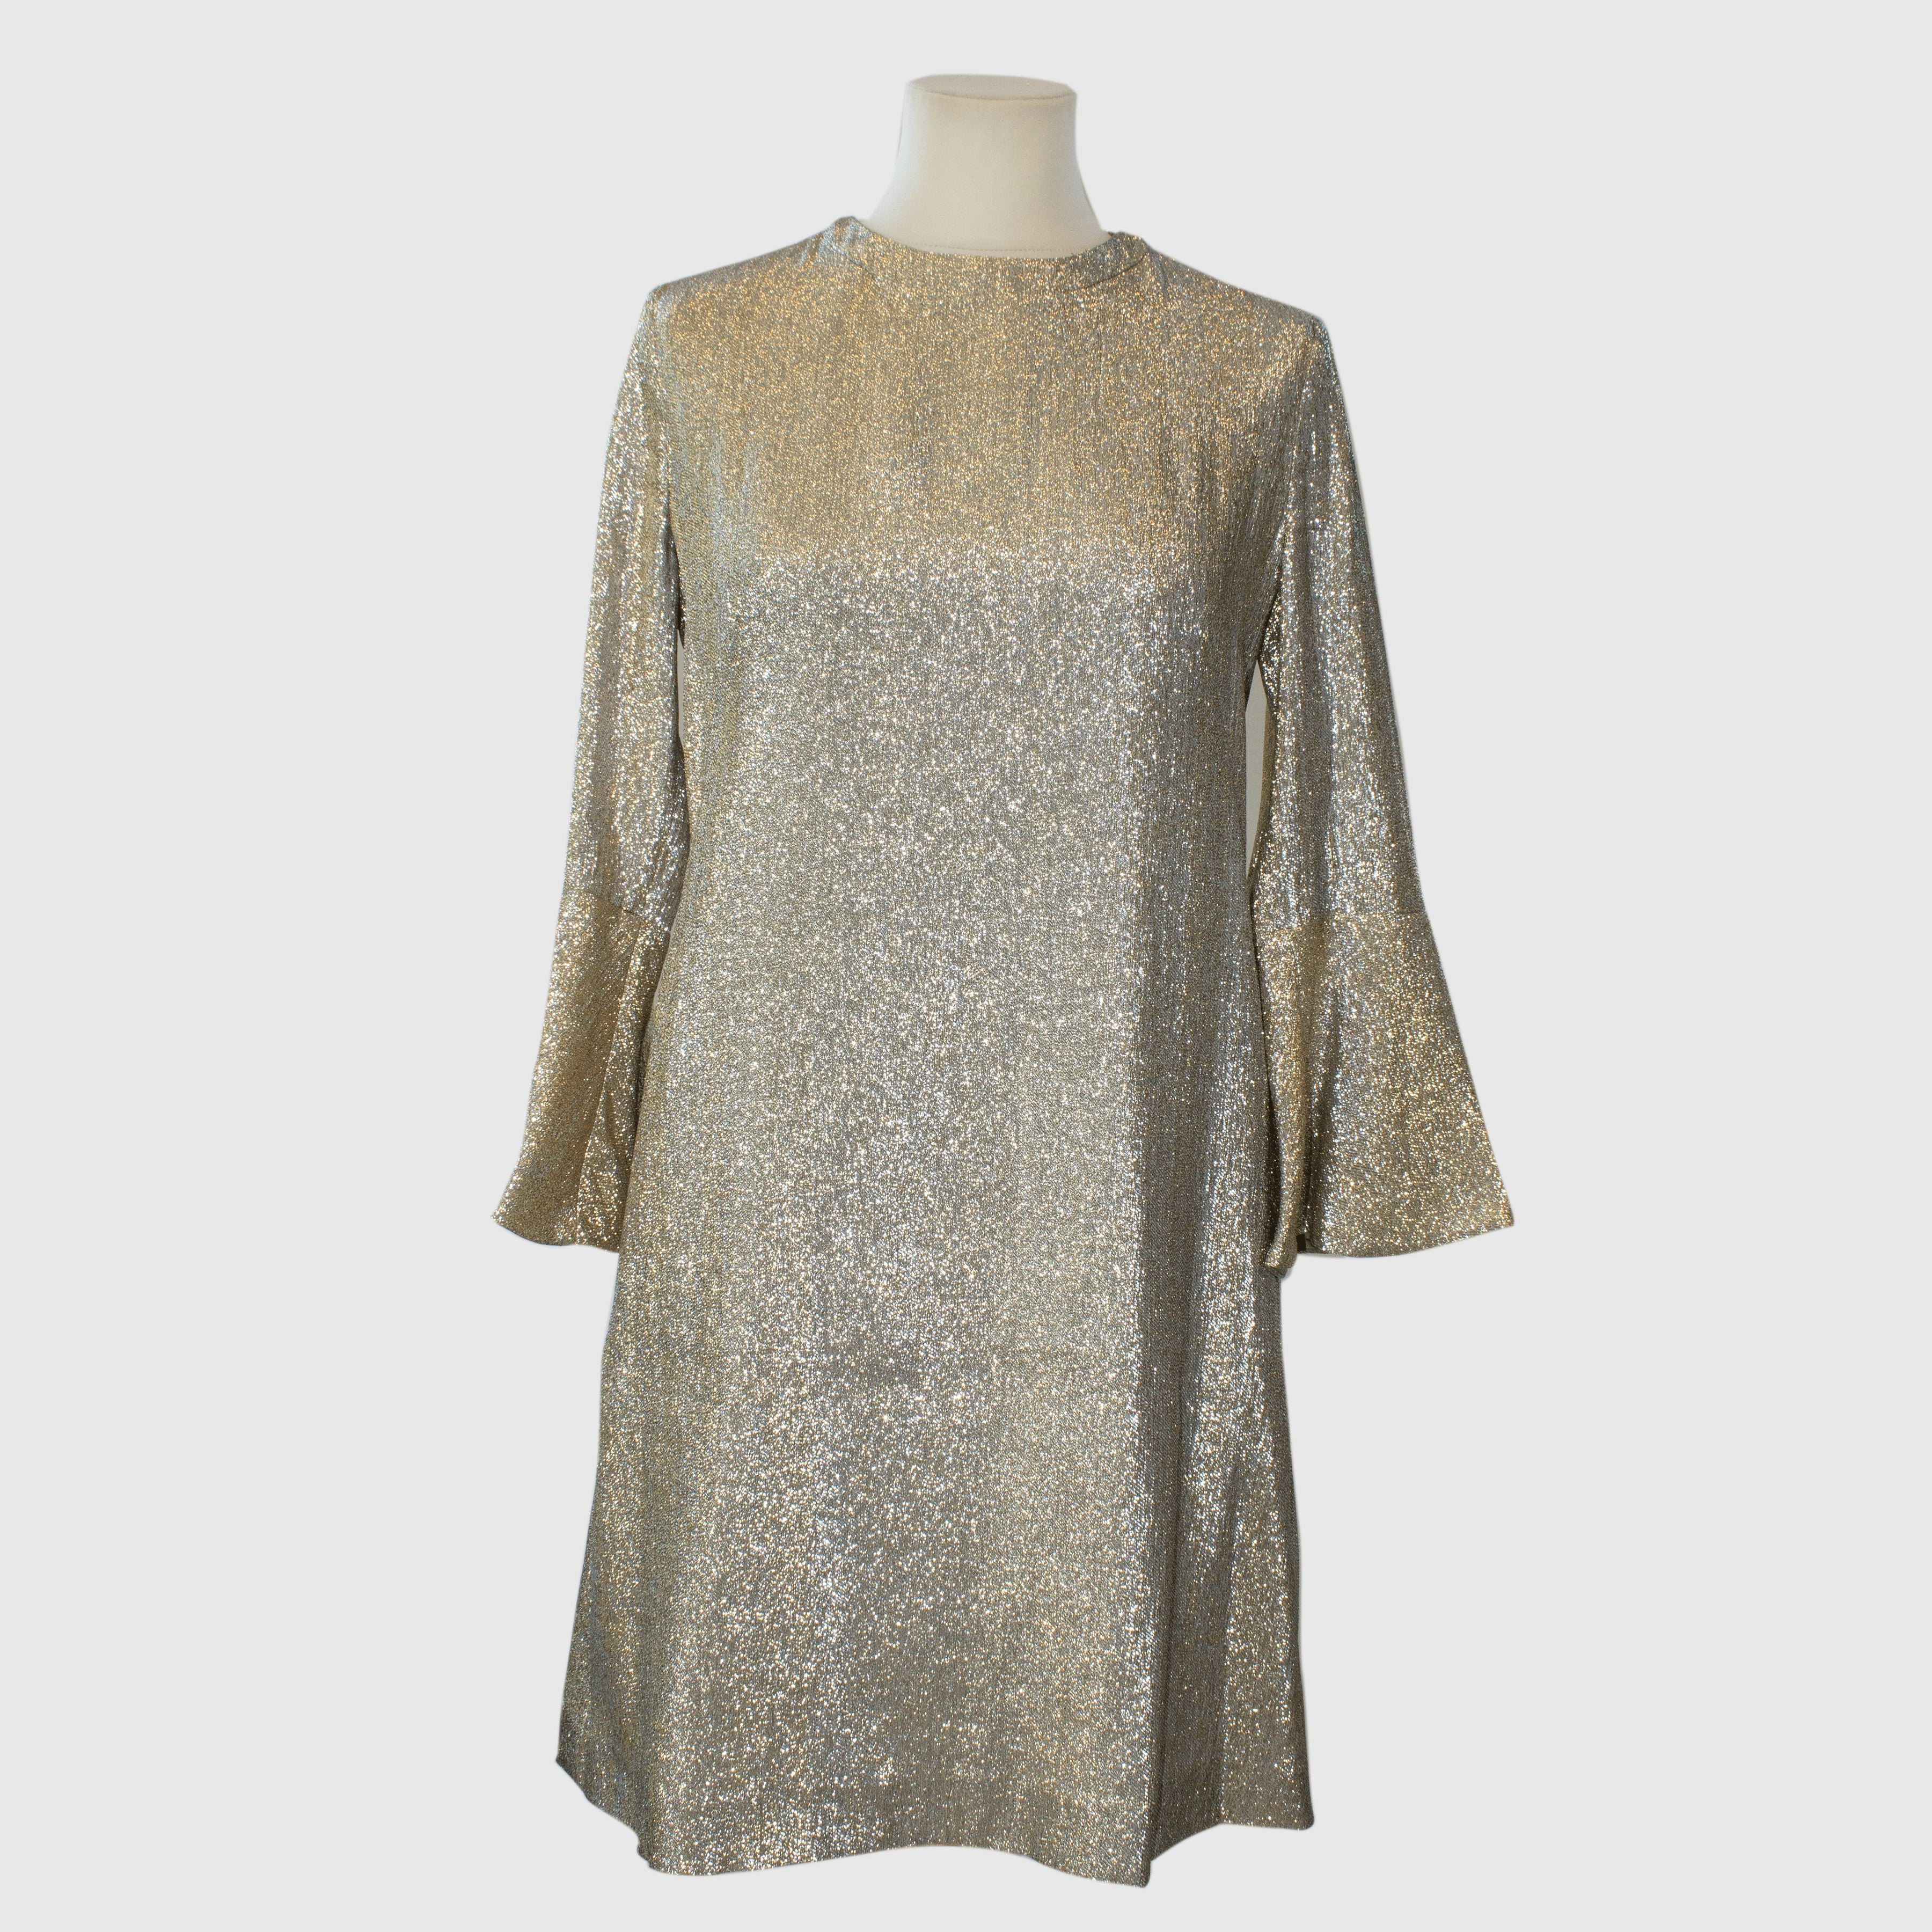 Metallic Gold Longsleeve Dress